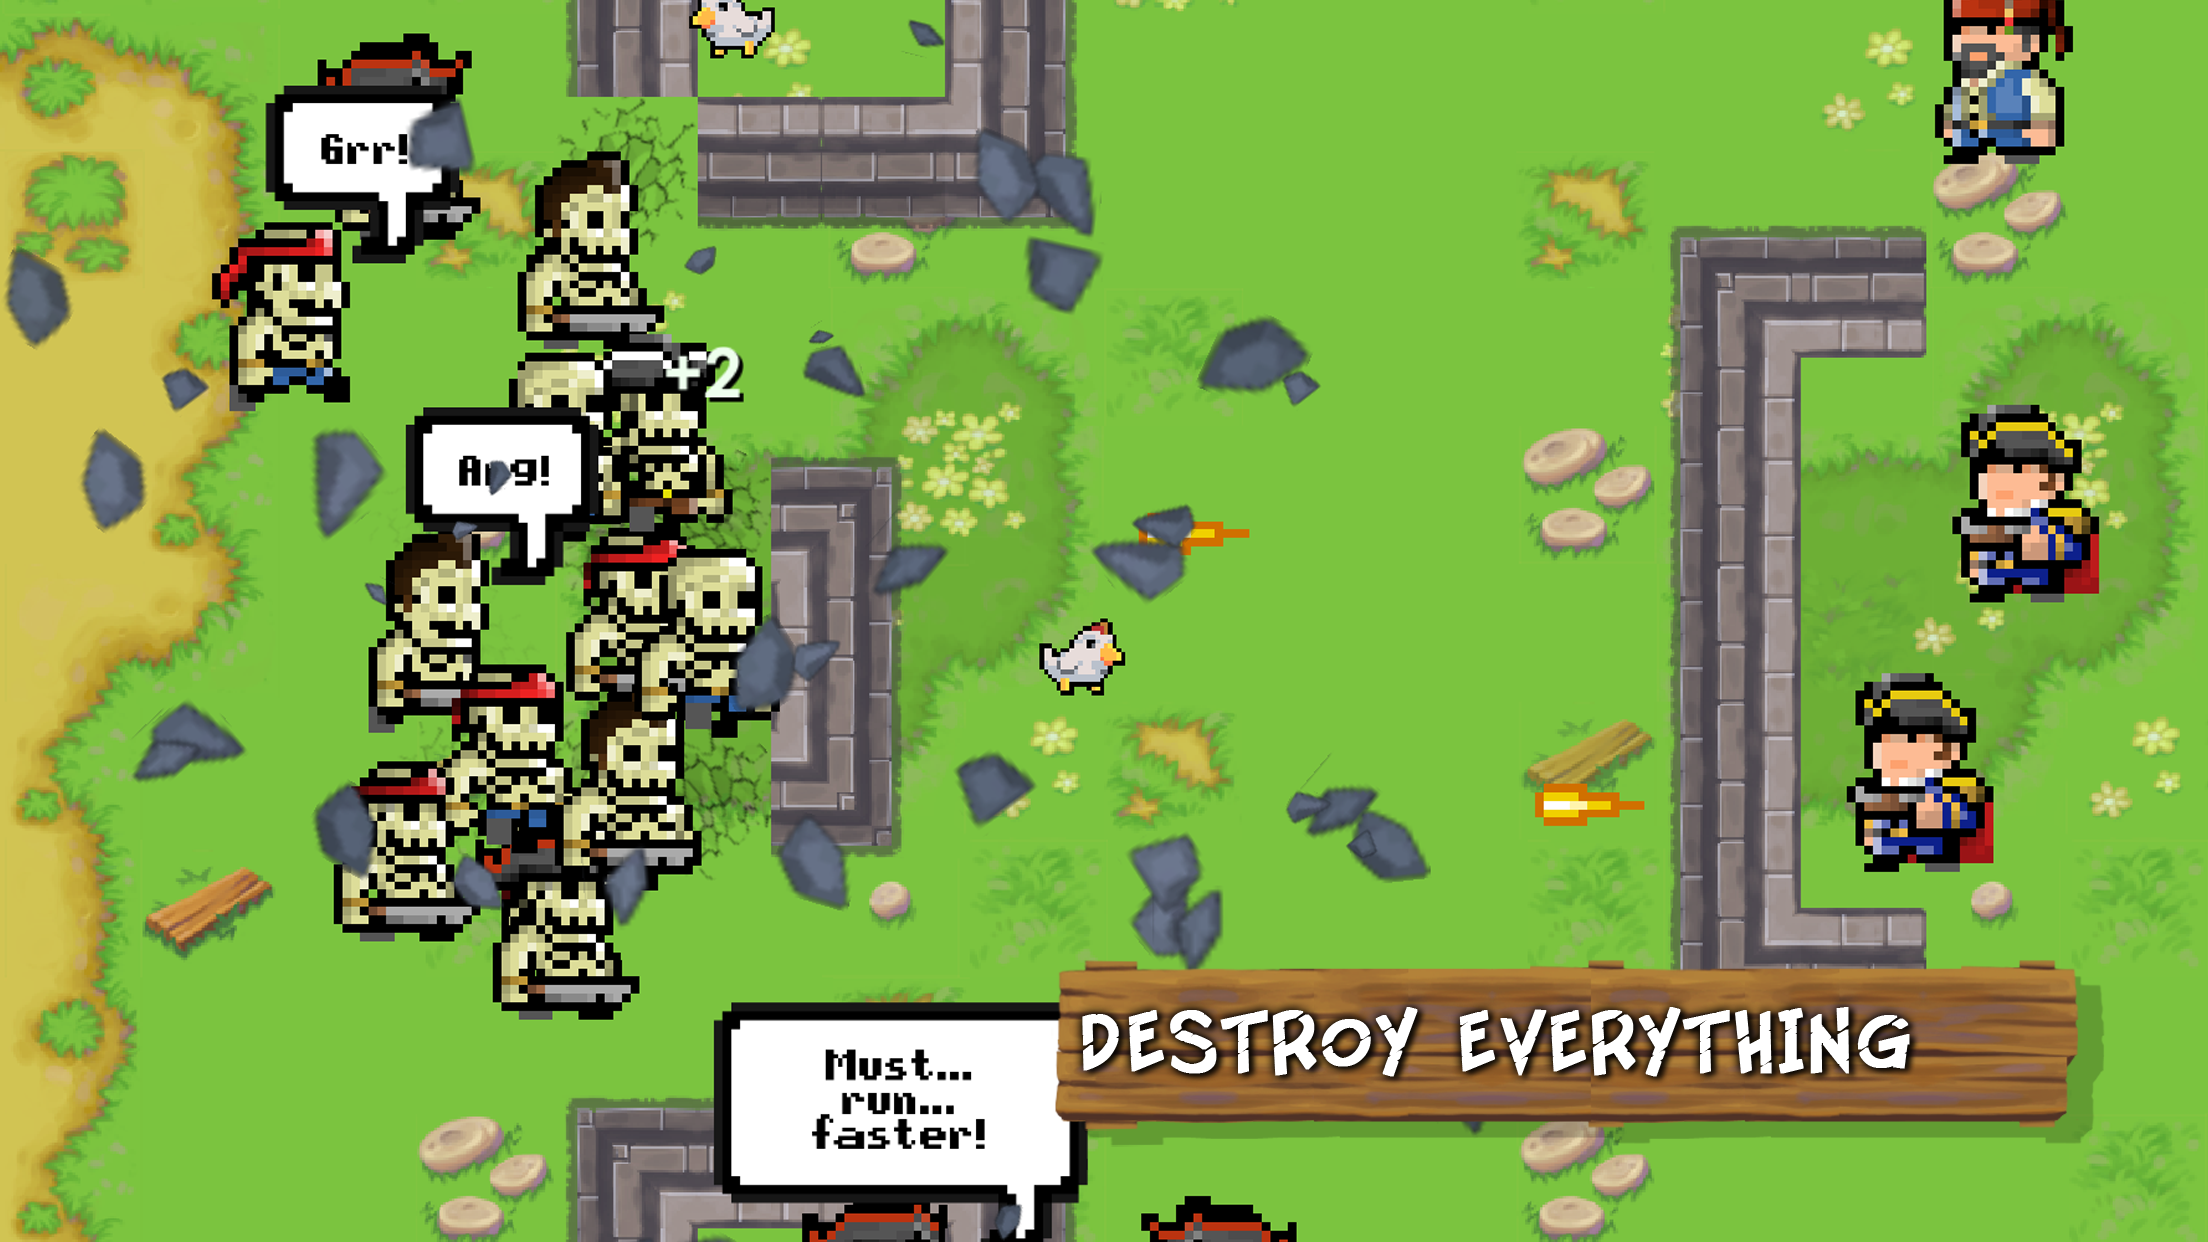 Screenshot of Zombies VS Pirates